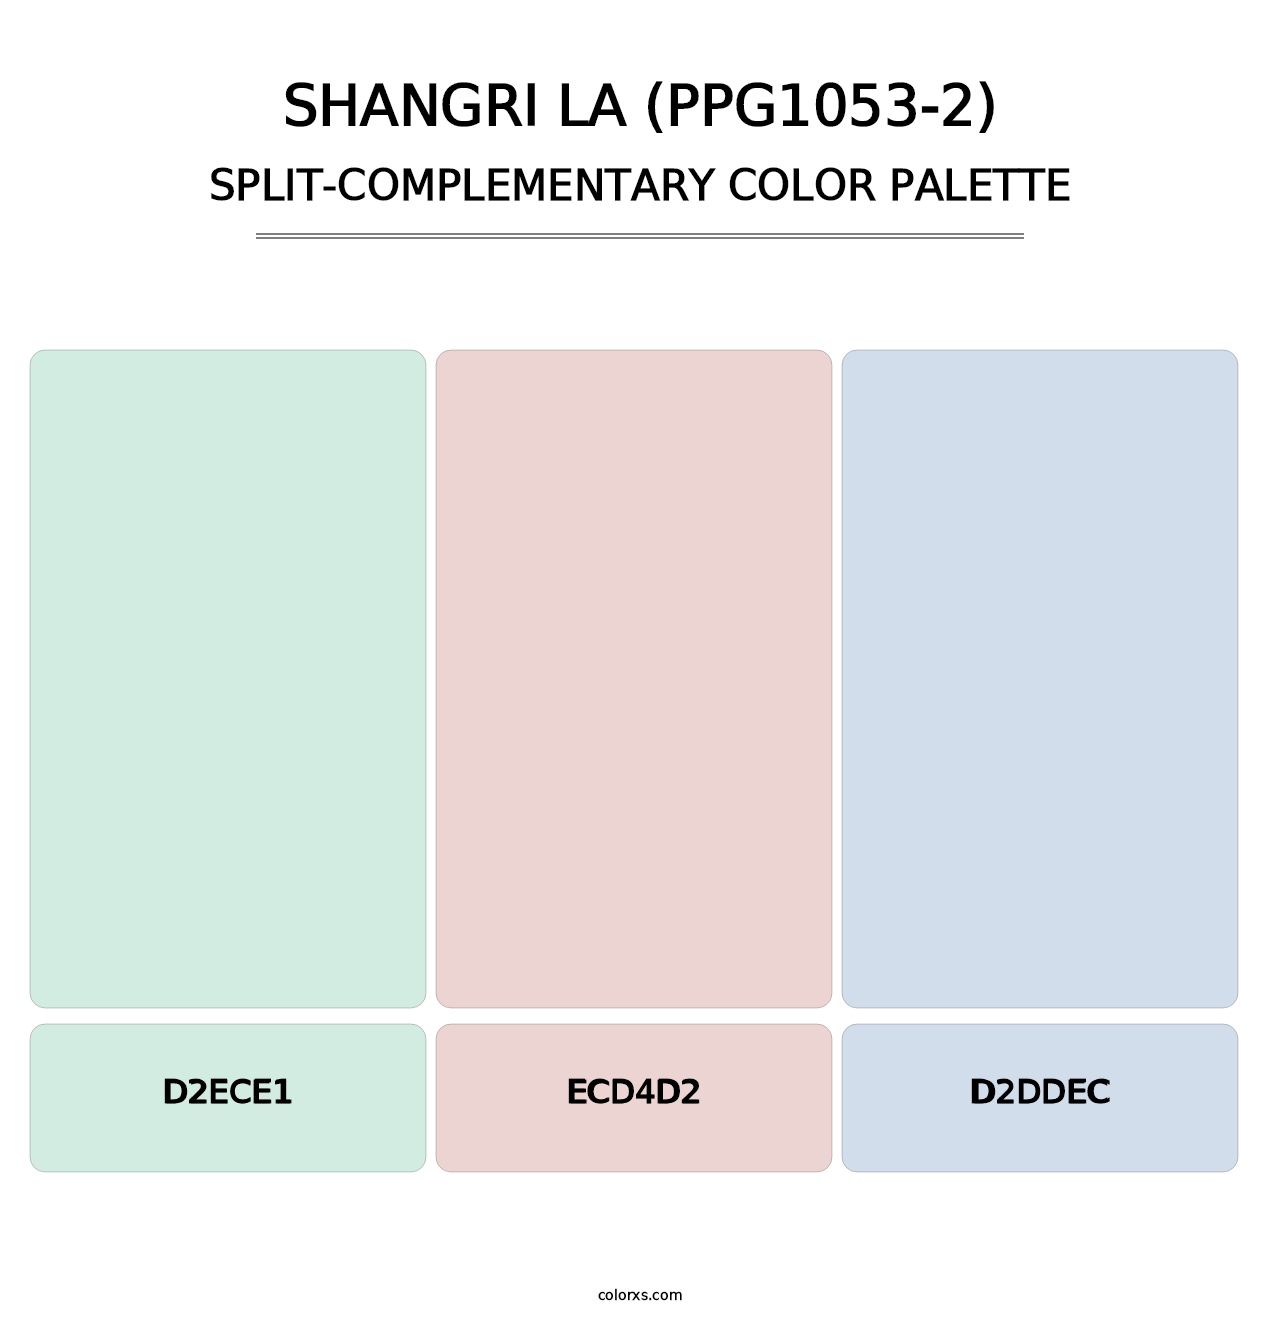 Shangri La (PPG1053-2) - Split-Complementary Color Palette